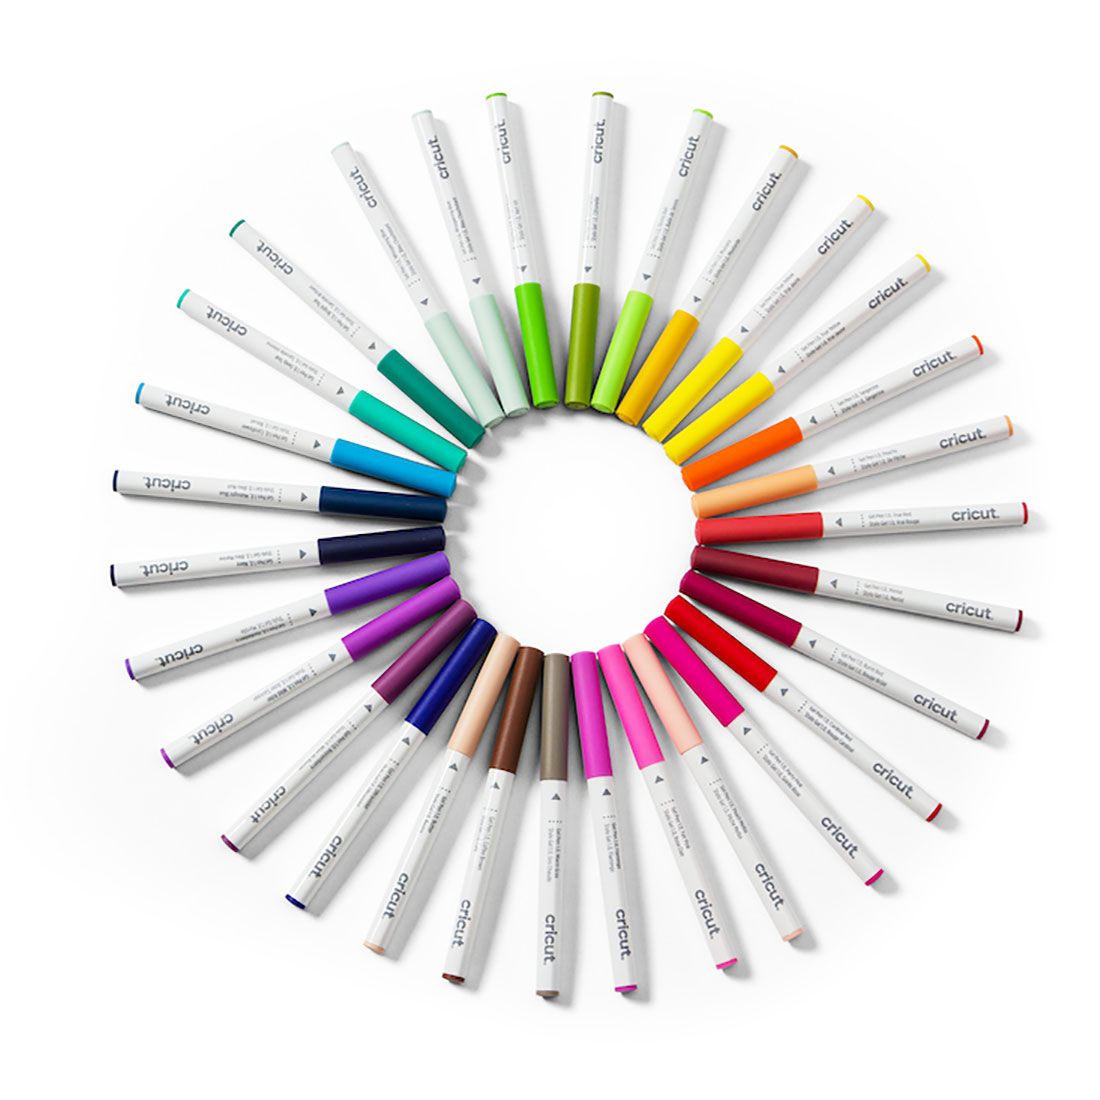 Cricut Ultimate Pen Set, Gel Pens 30 Pack - Damaged Package